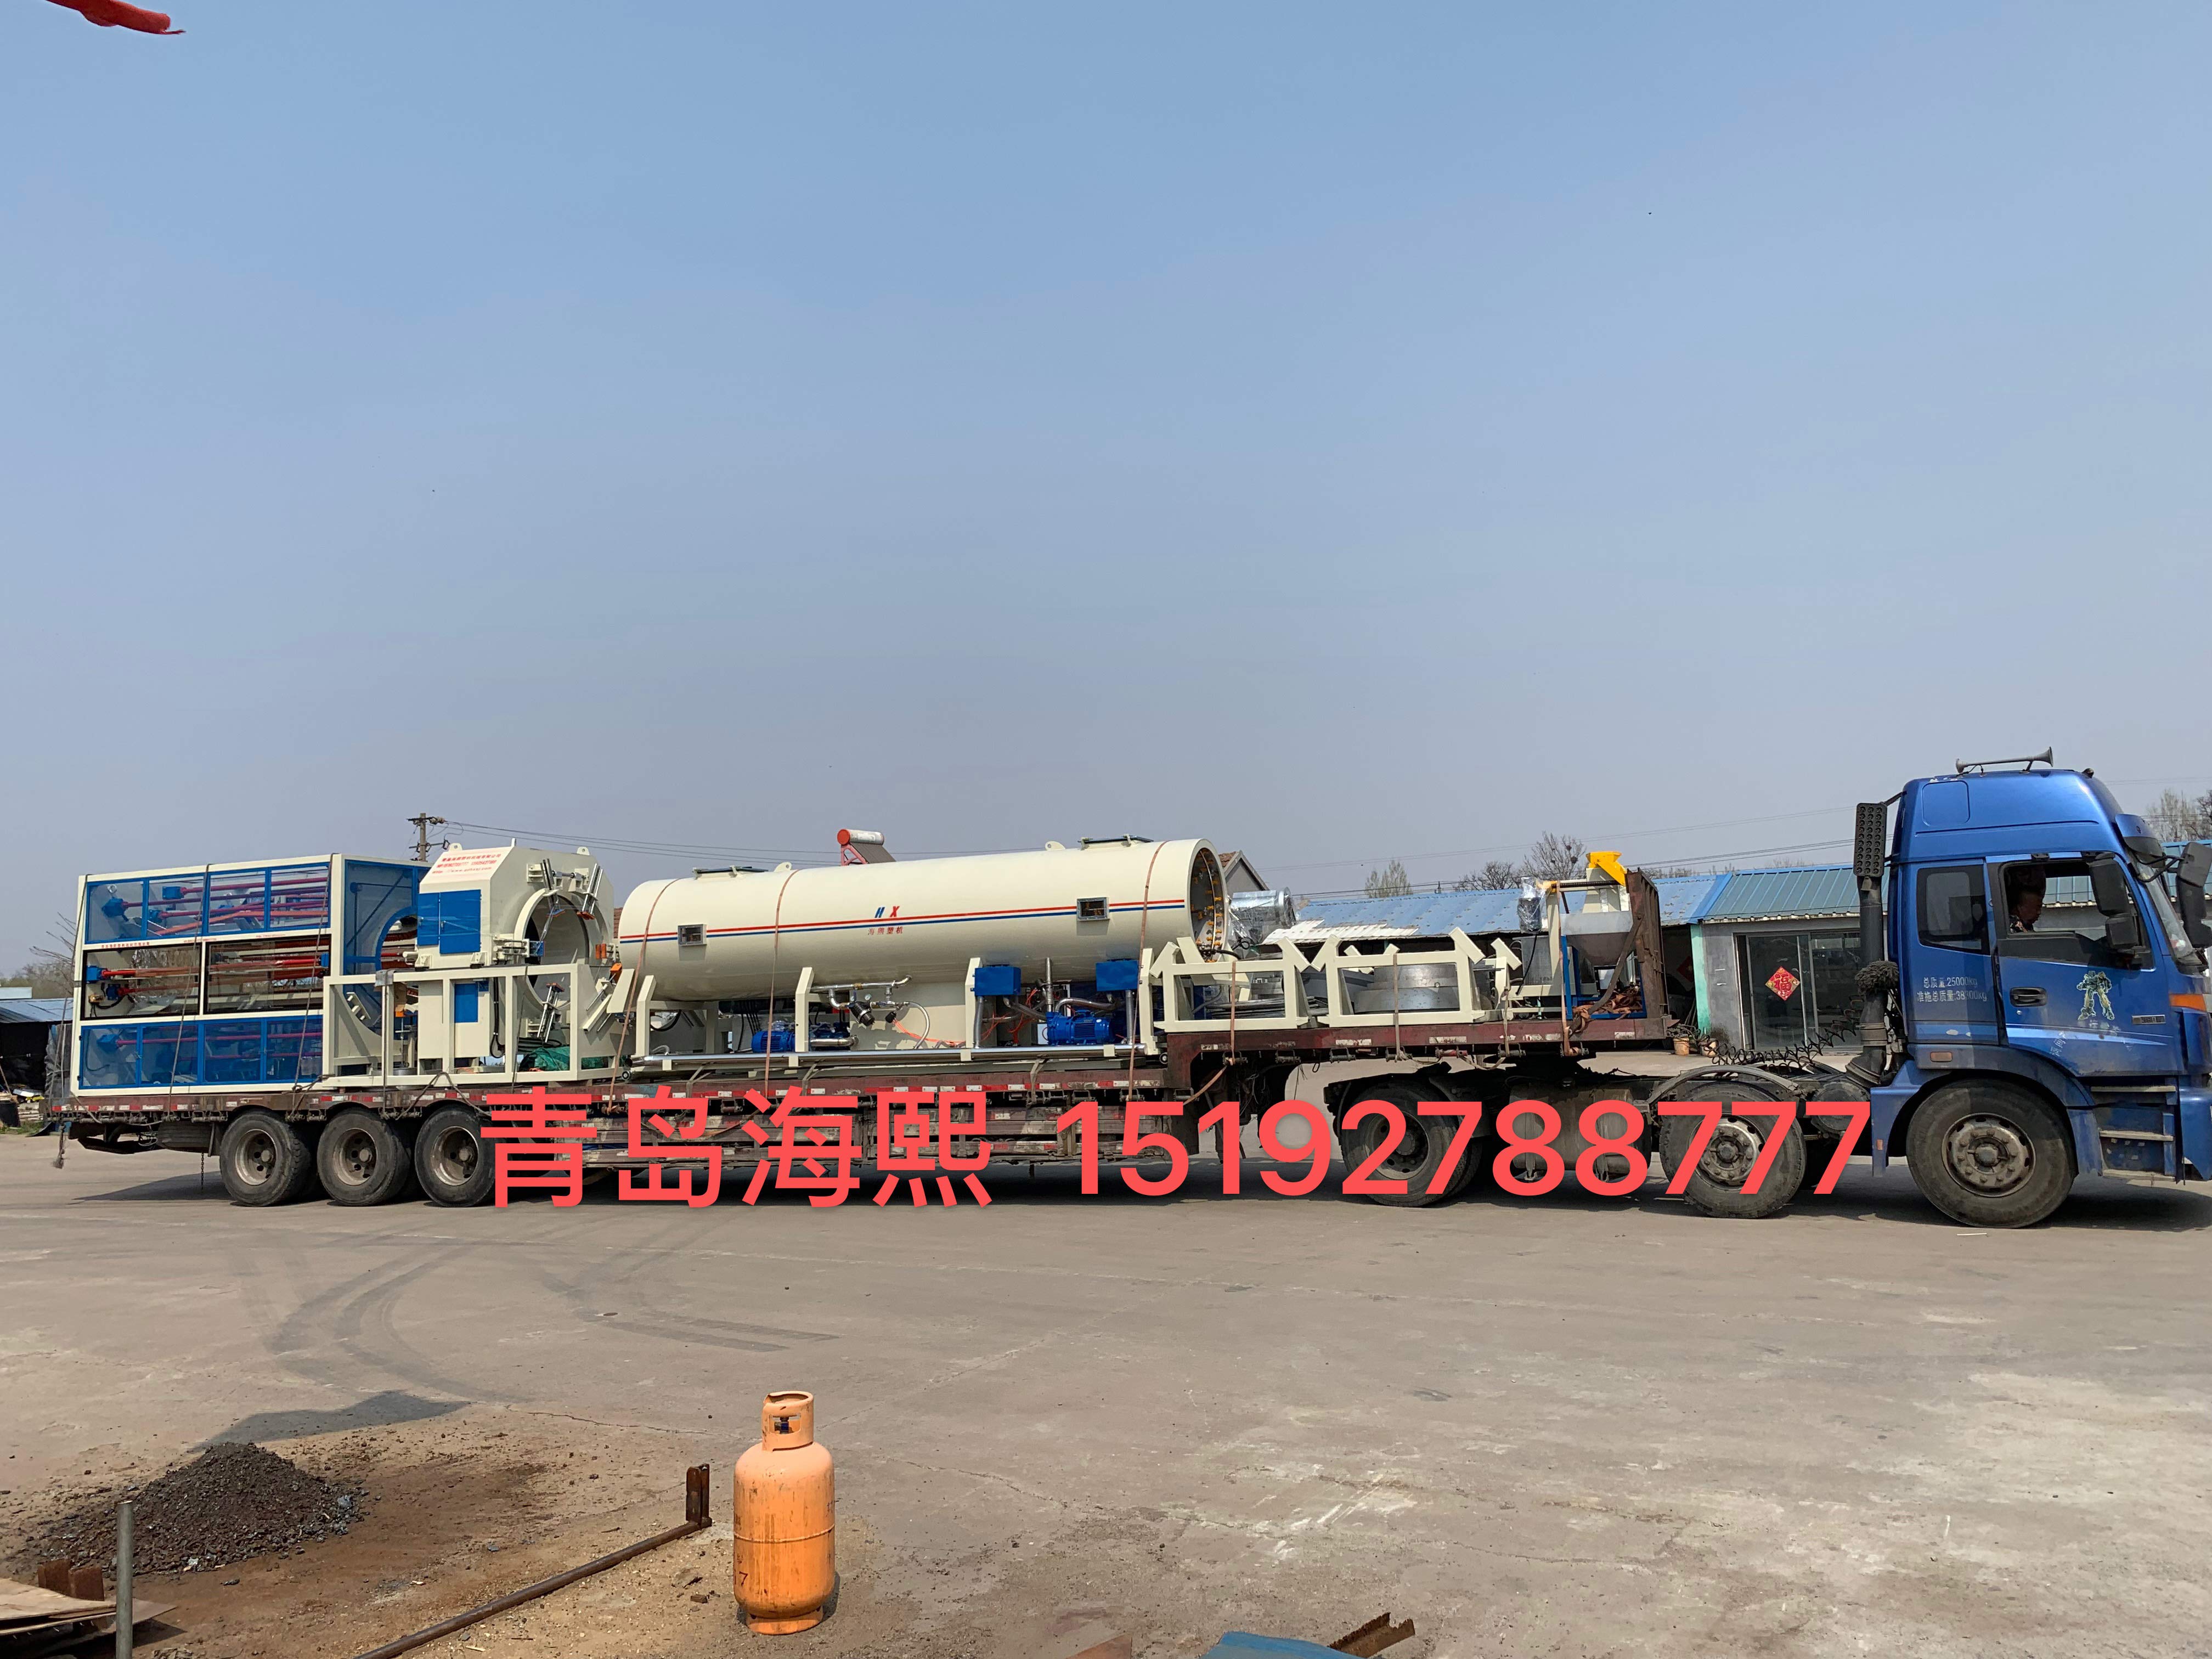 Hebei Huayi pipeline Manufacturing Co., Ltd